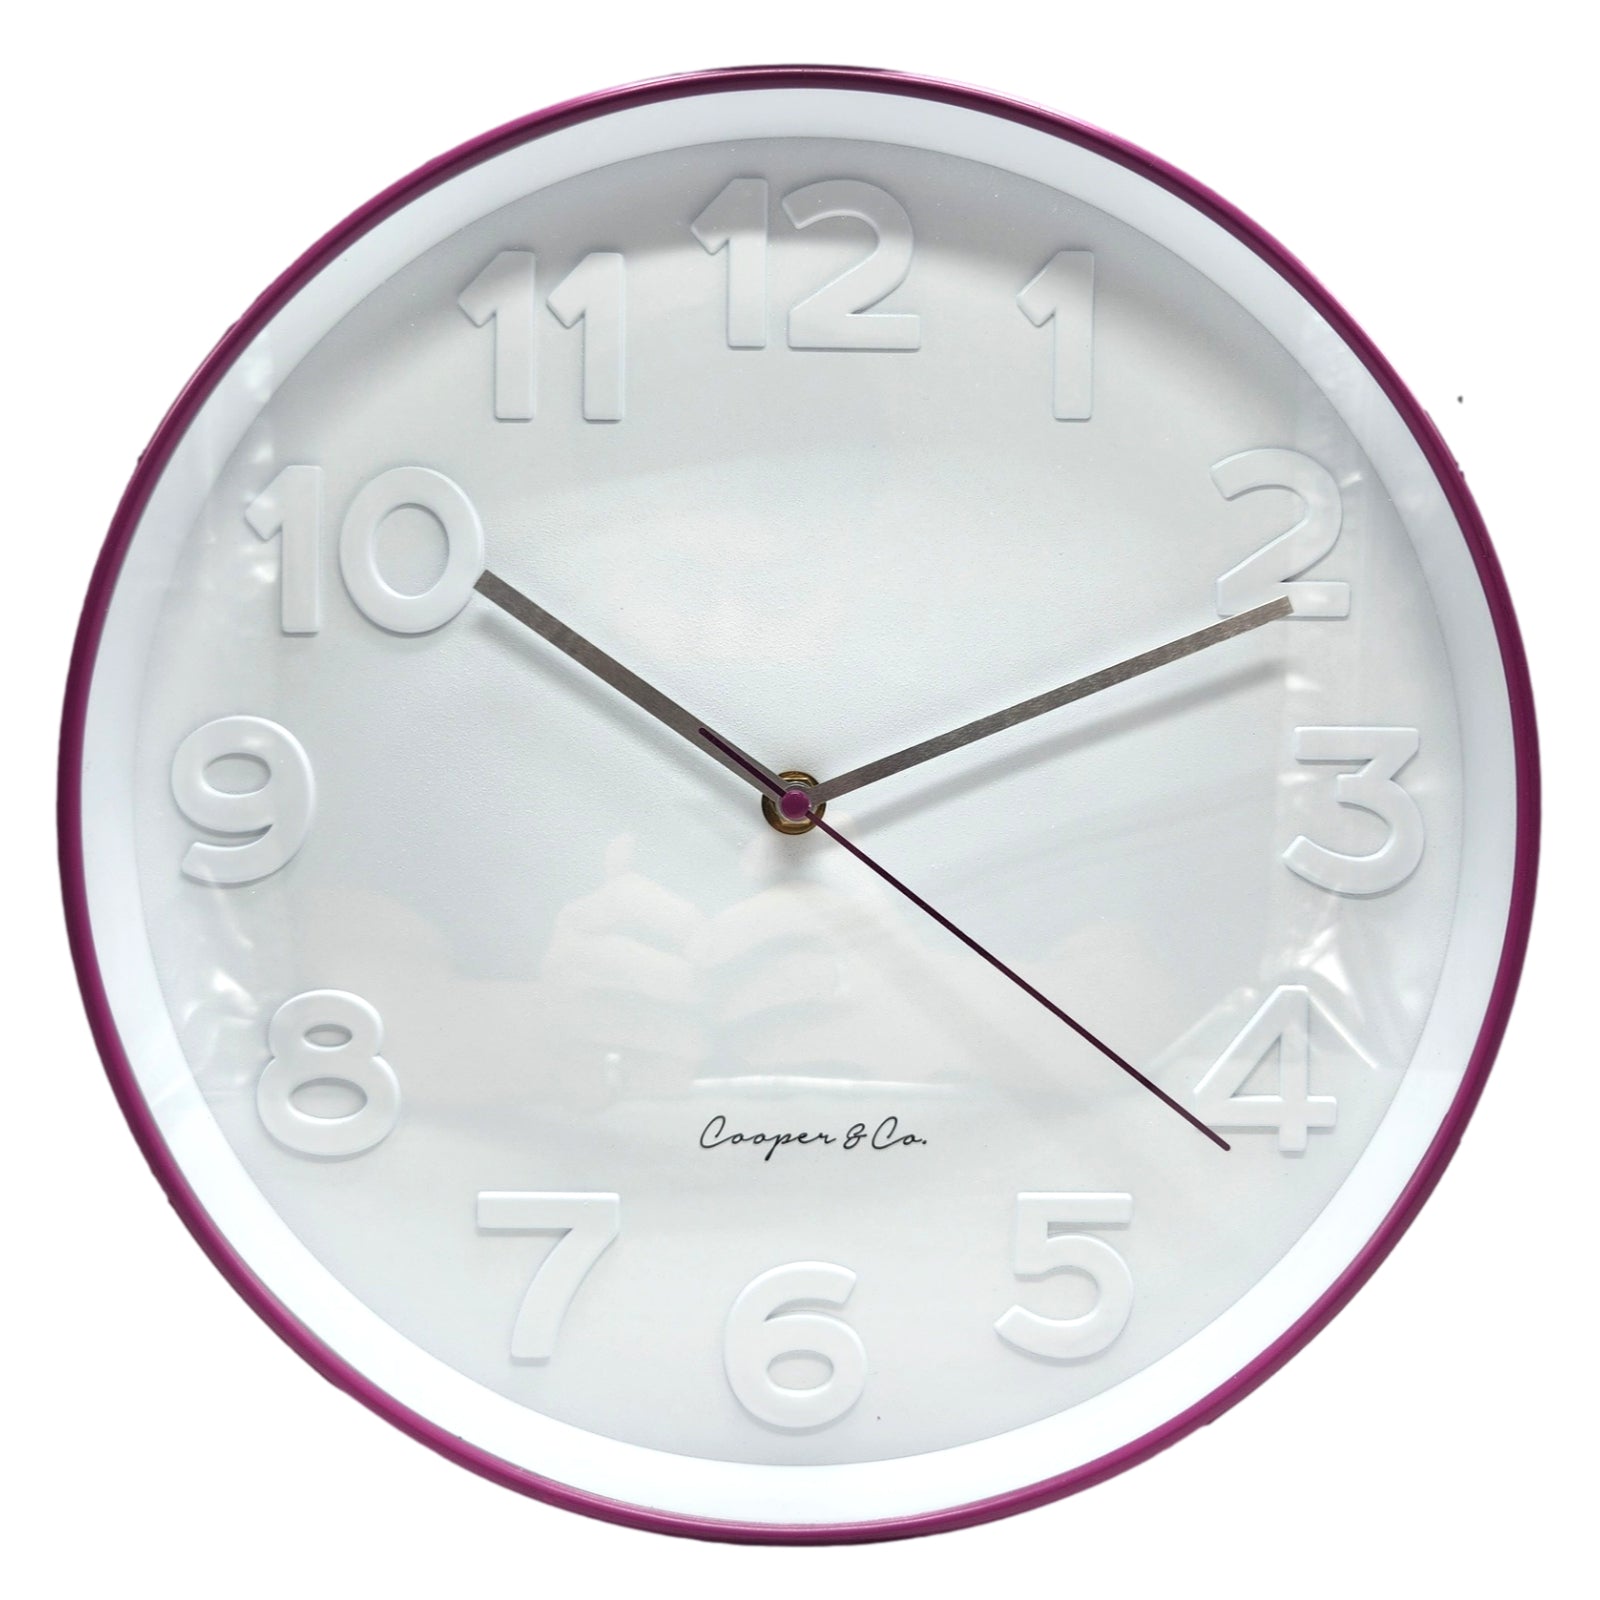 Copper & Co 29.5cm Modern Round Wall Clocks Quality Quartz Silent Non-Ticking Wall Clock Decor Wall Clocks - Homeware Discounts